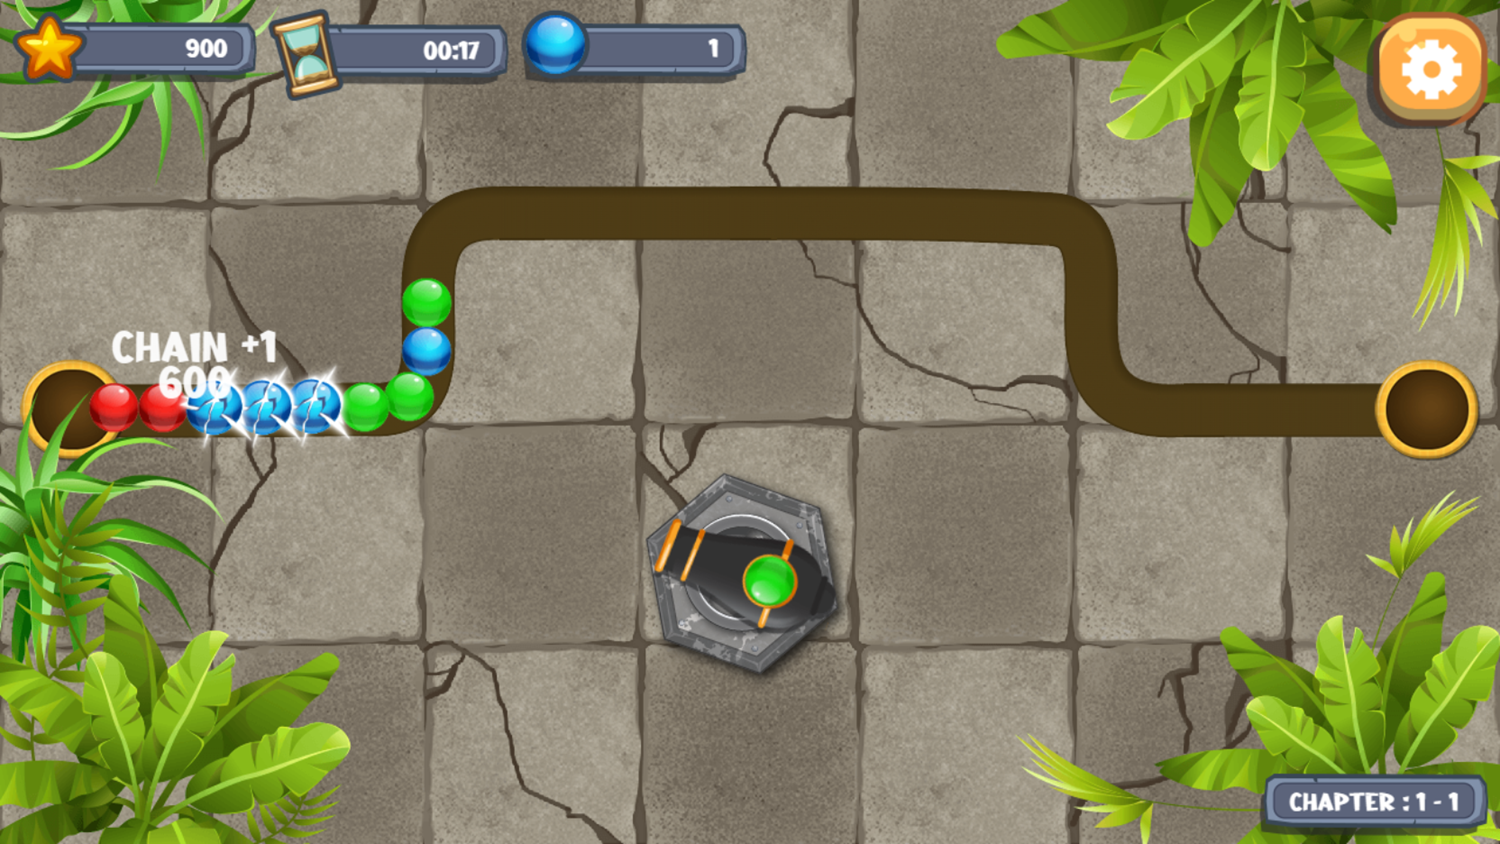 Marble Blast Game Level Play Screenshot.